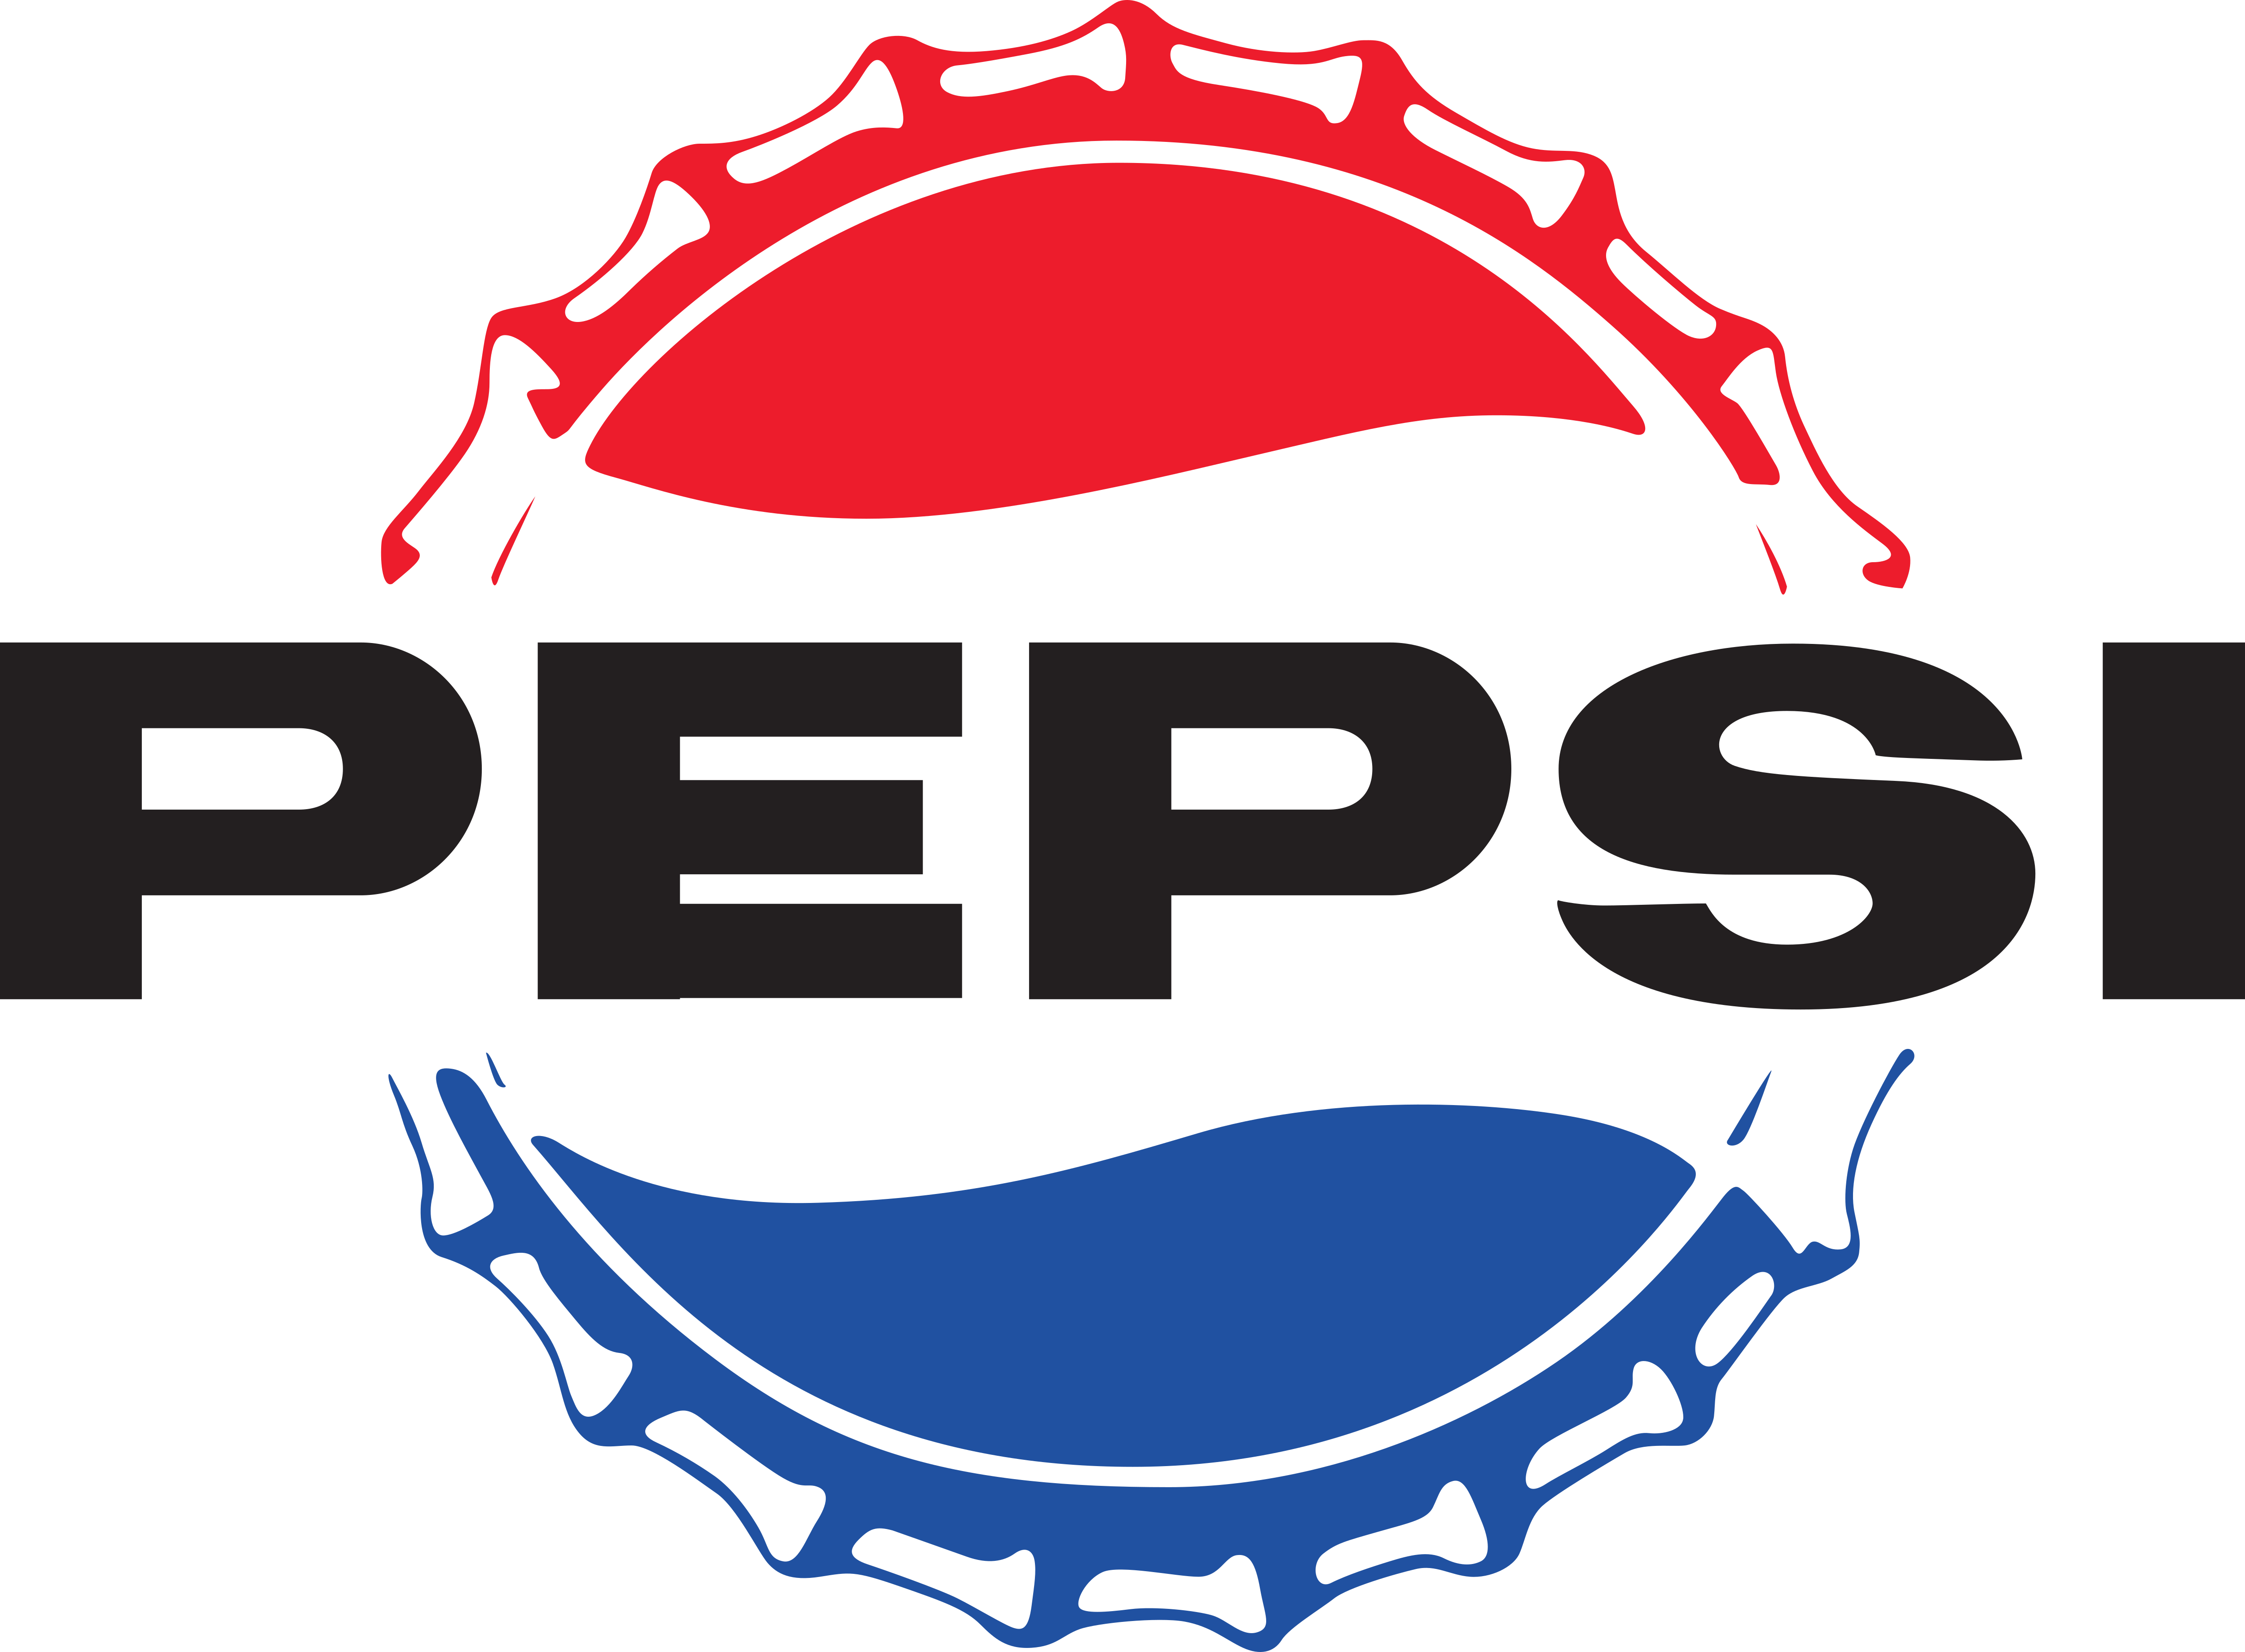 Printable Pepsi Logos